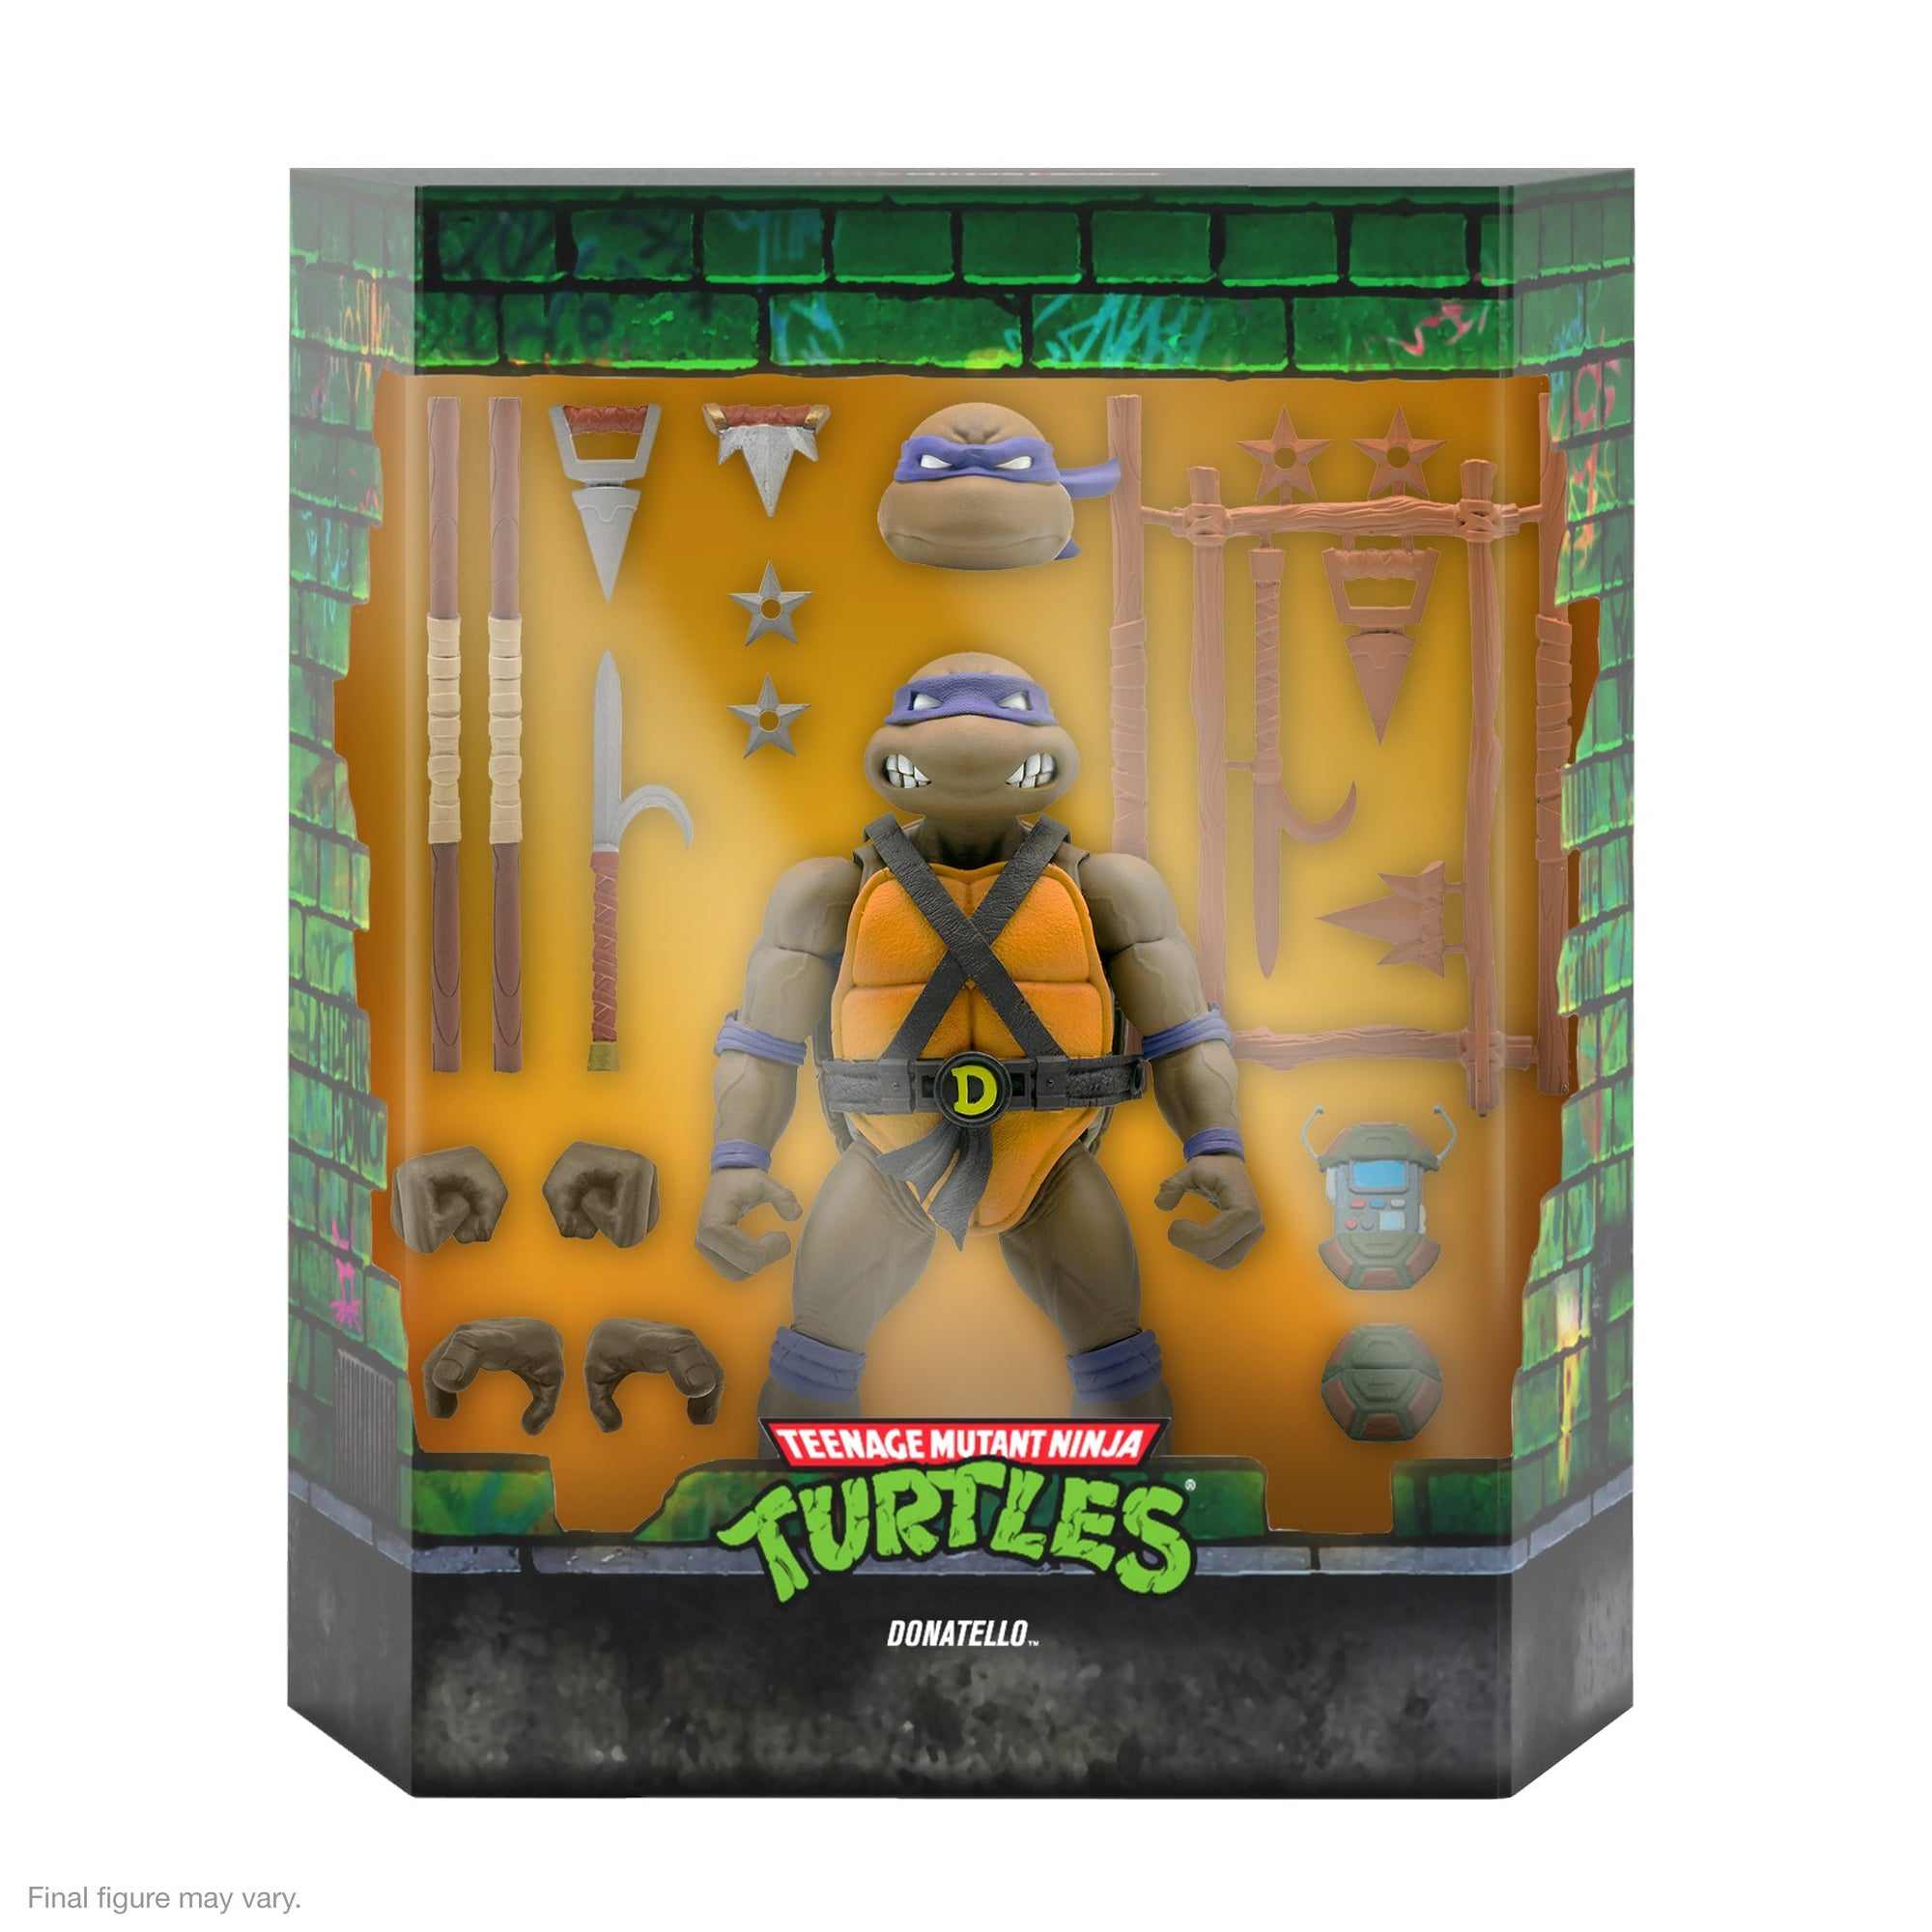 Teenage Mutant Ninja Turtles ULTIMATES! Donatello Action Figure by Super7 -Super7 - India - www.superherotoystore.com